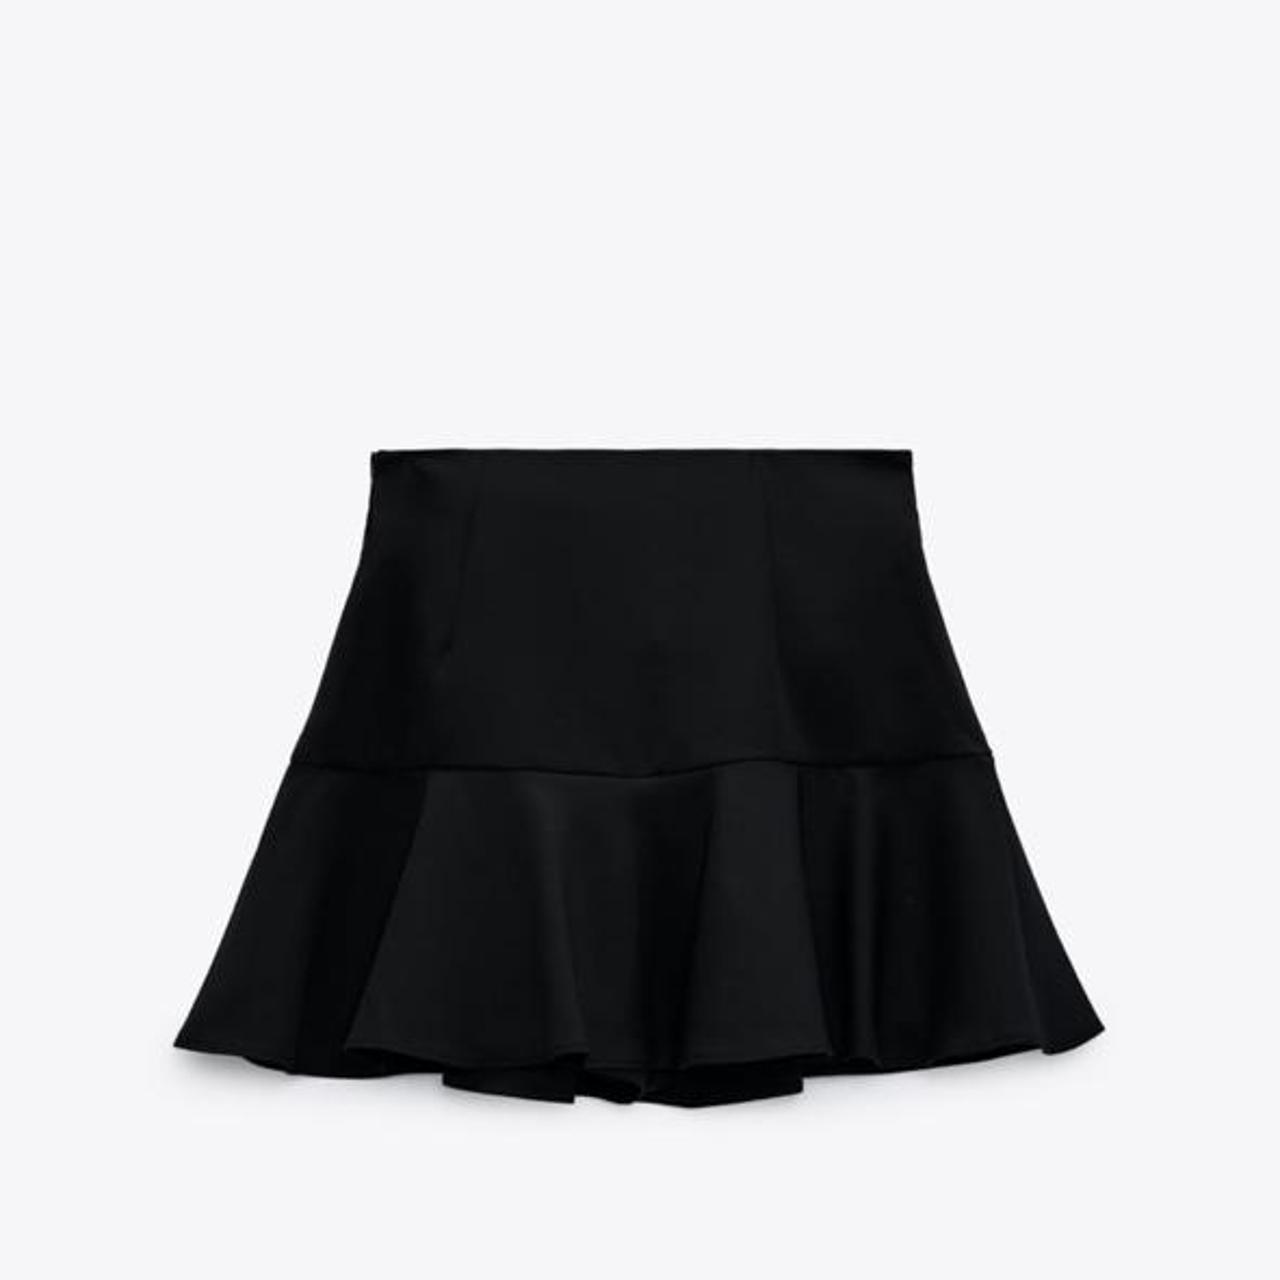 Zara mini-skirt/skort (skirt with shorts underneath)... - Depop